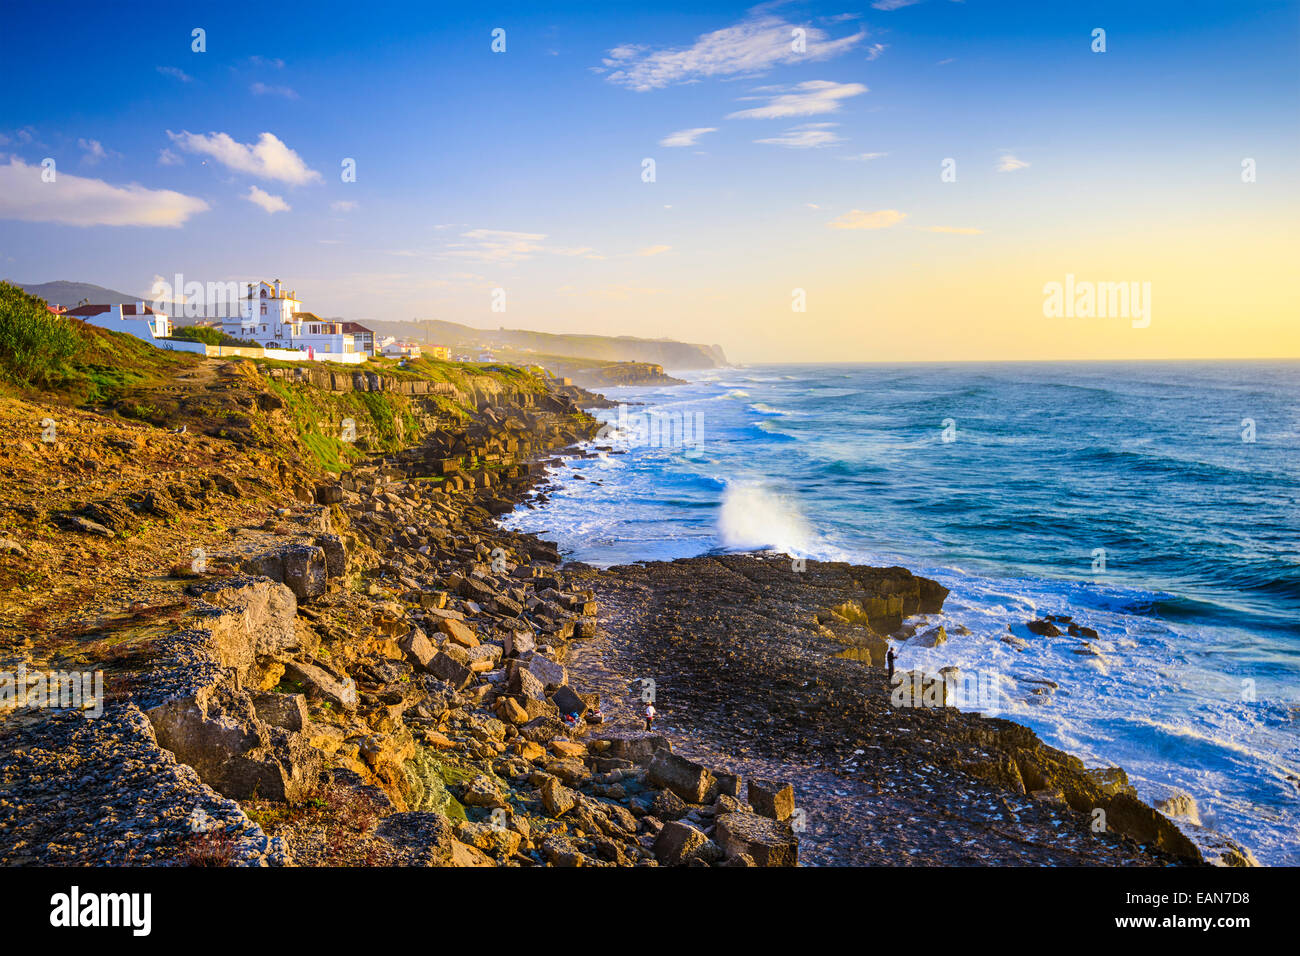 Sintra, Portugal coastline on the Atlantic Ocean. Stock Photo